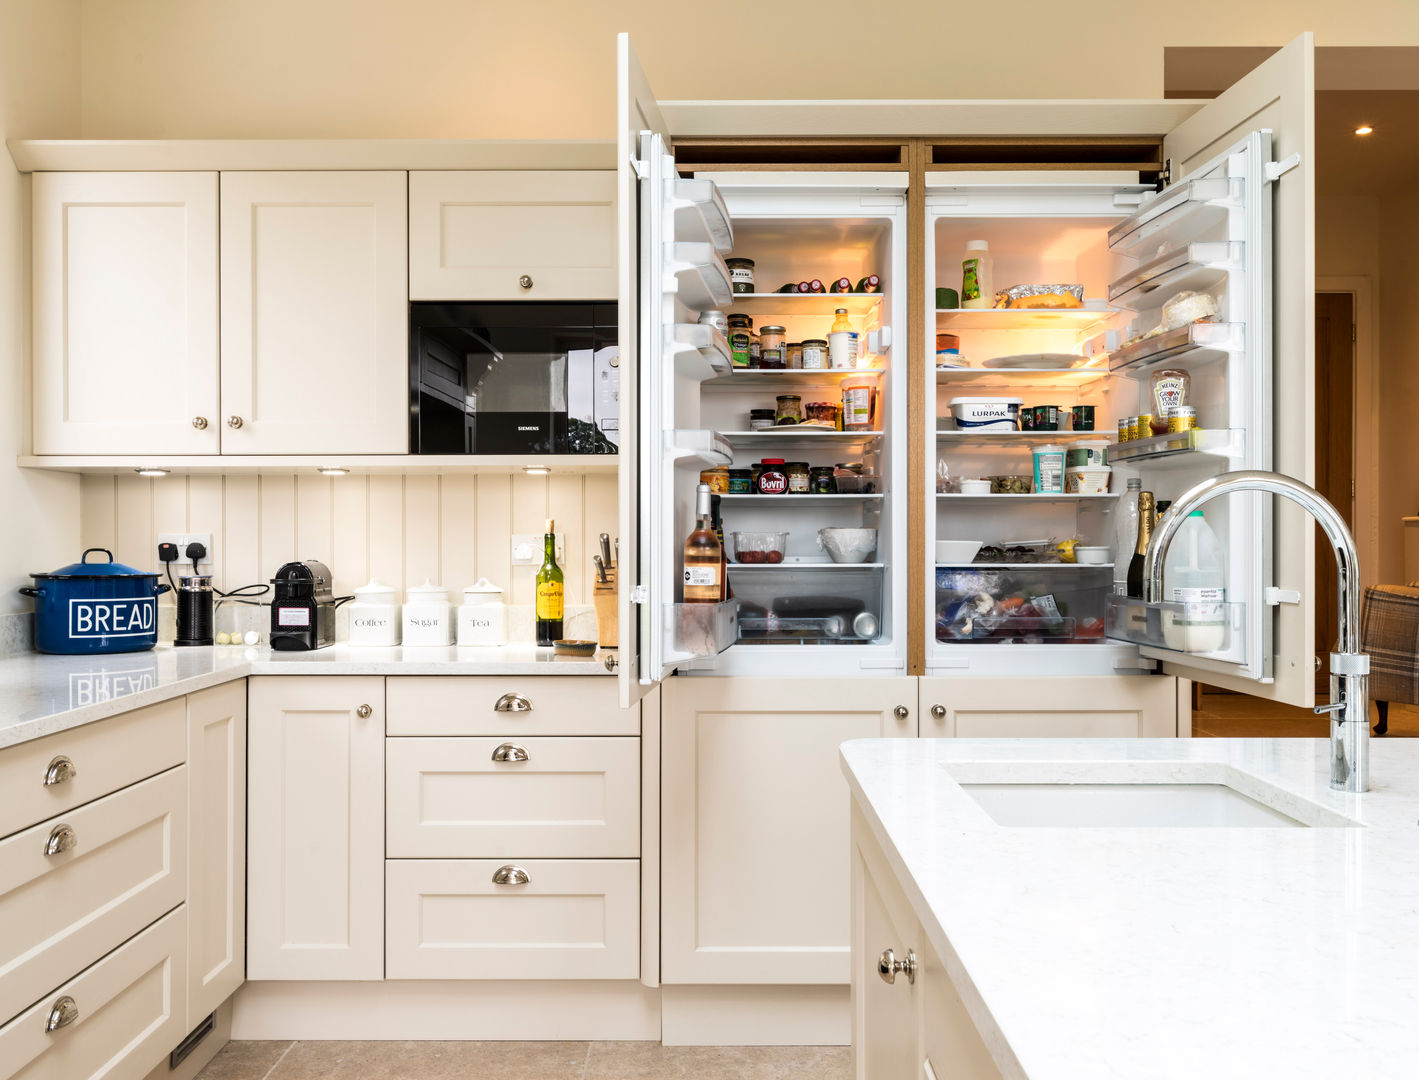 Integrated fridges John Gauld Photography 置入式廚房 Fridge/freezers,Shaker style,Kitchen island